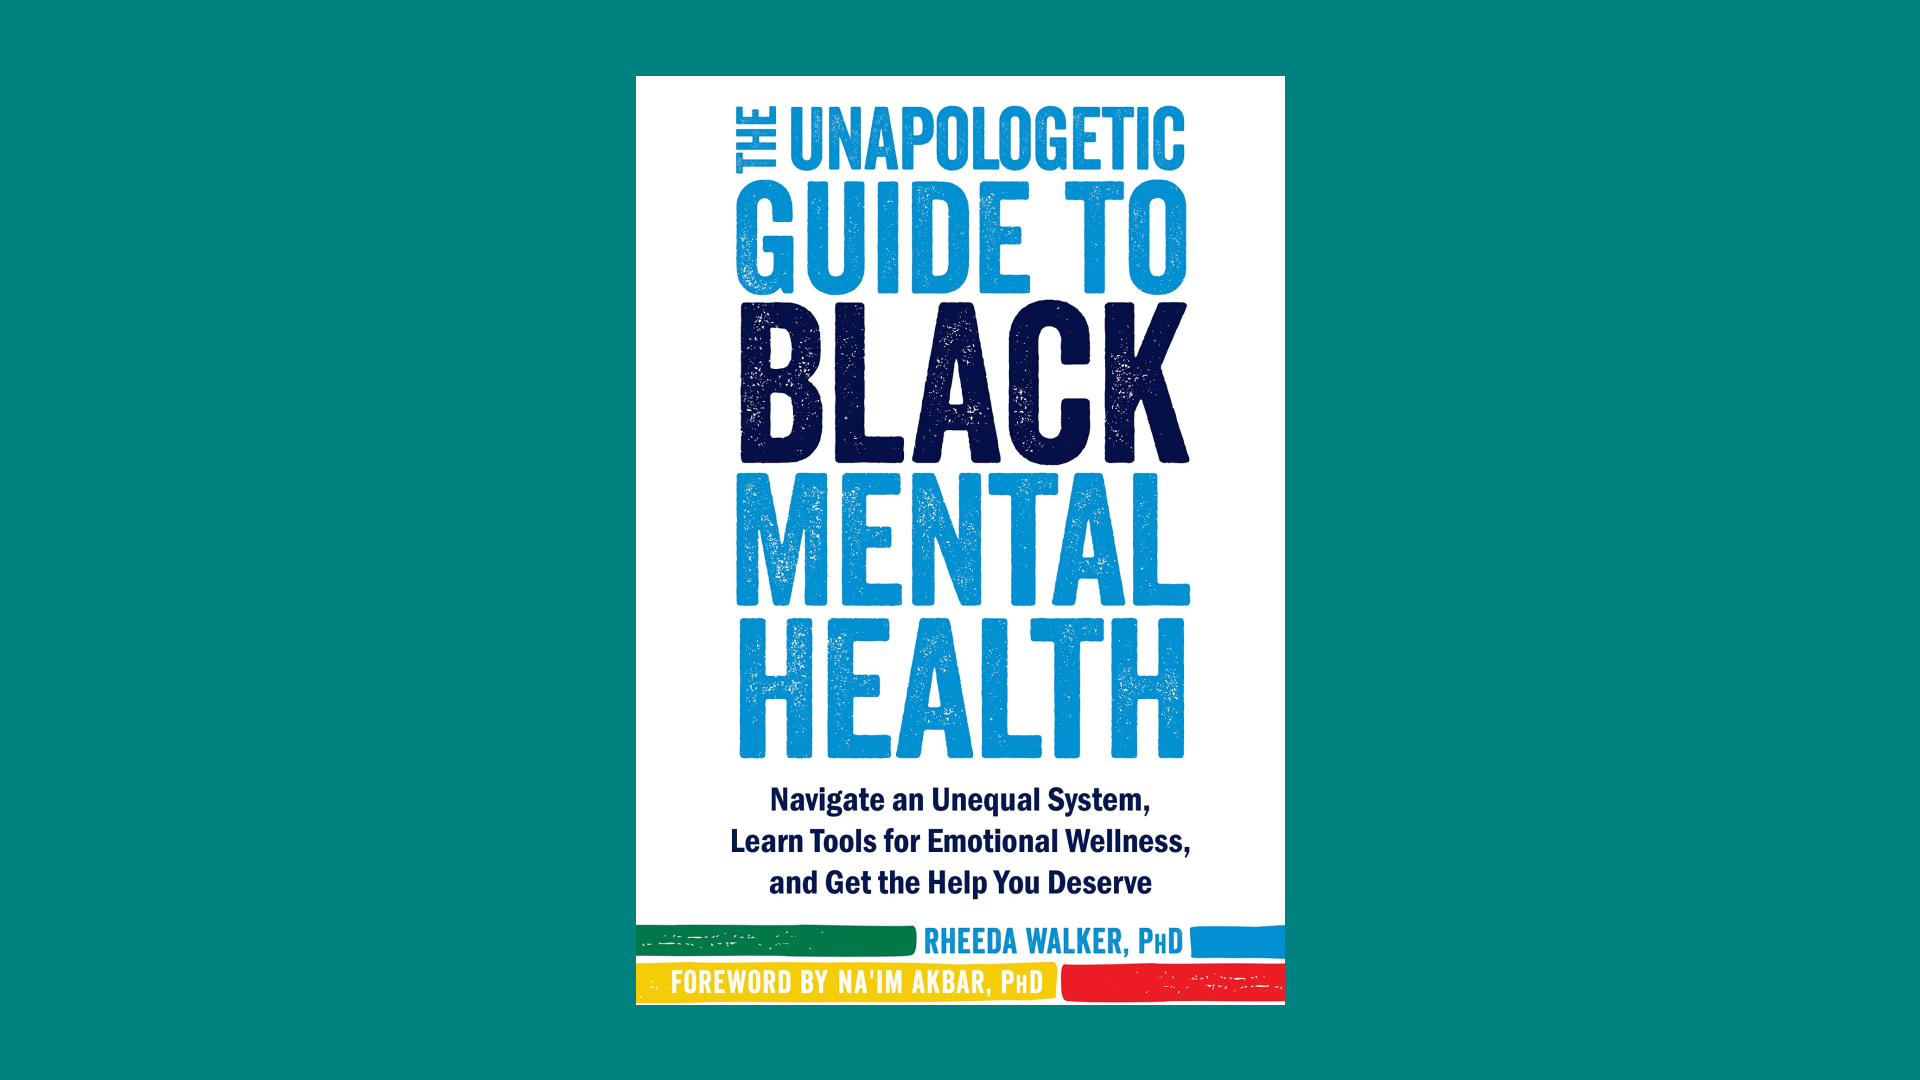 "The Unapologetic Guide to Black Mental Health" by Rheeda Walker, Ph.D.